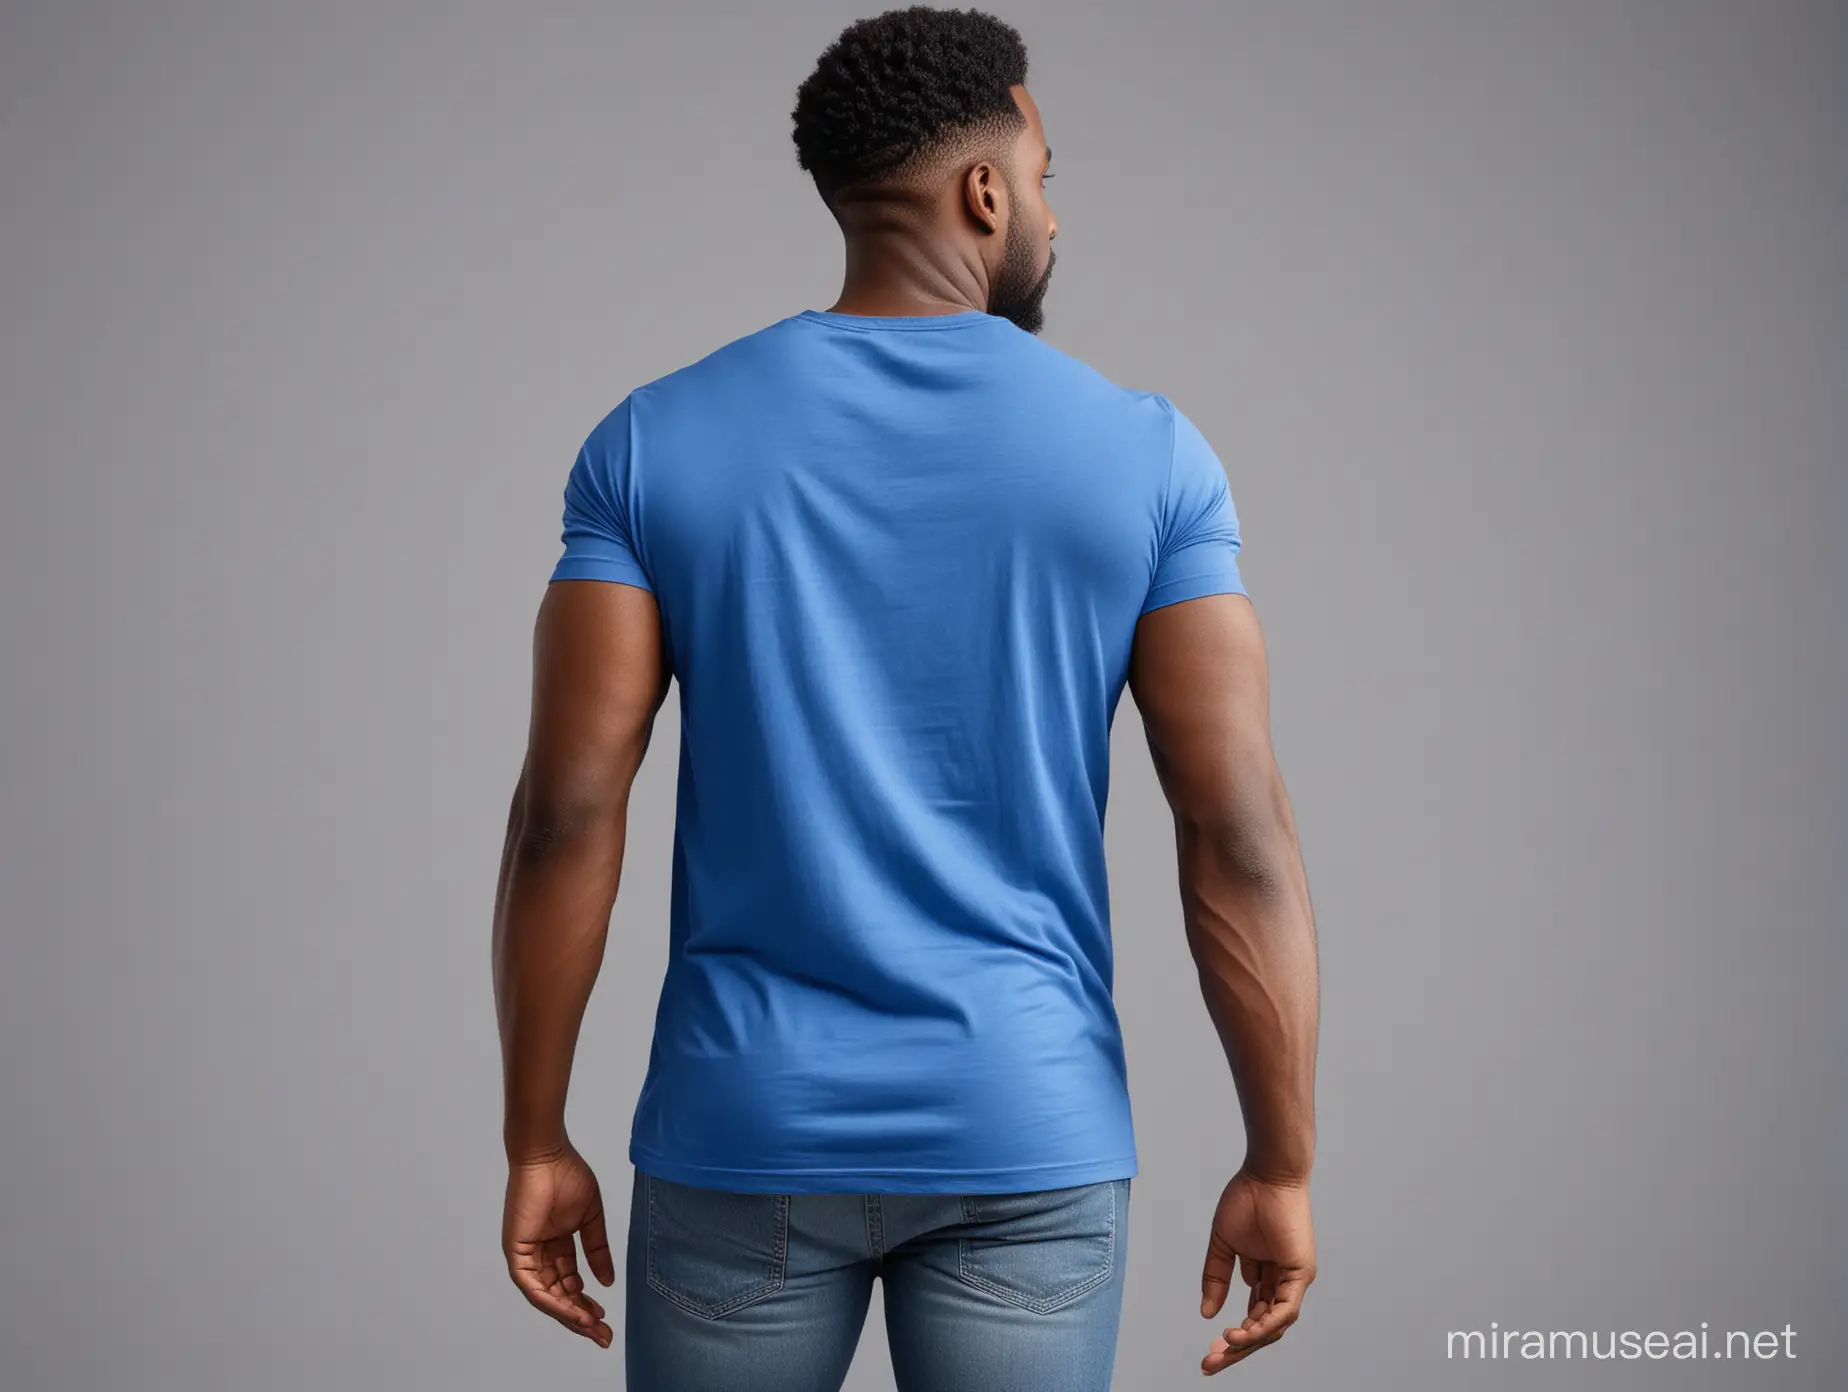 Confident Black Man Displaying Vibrant Blue TShirt